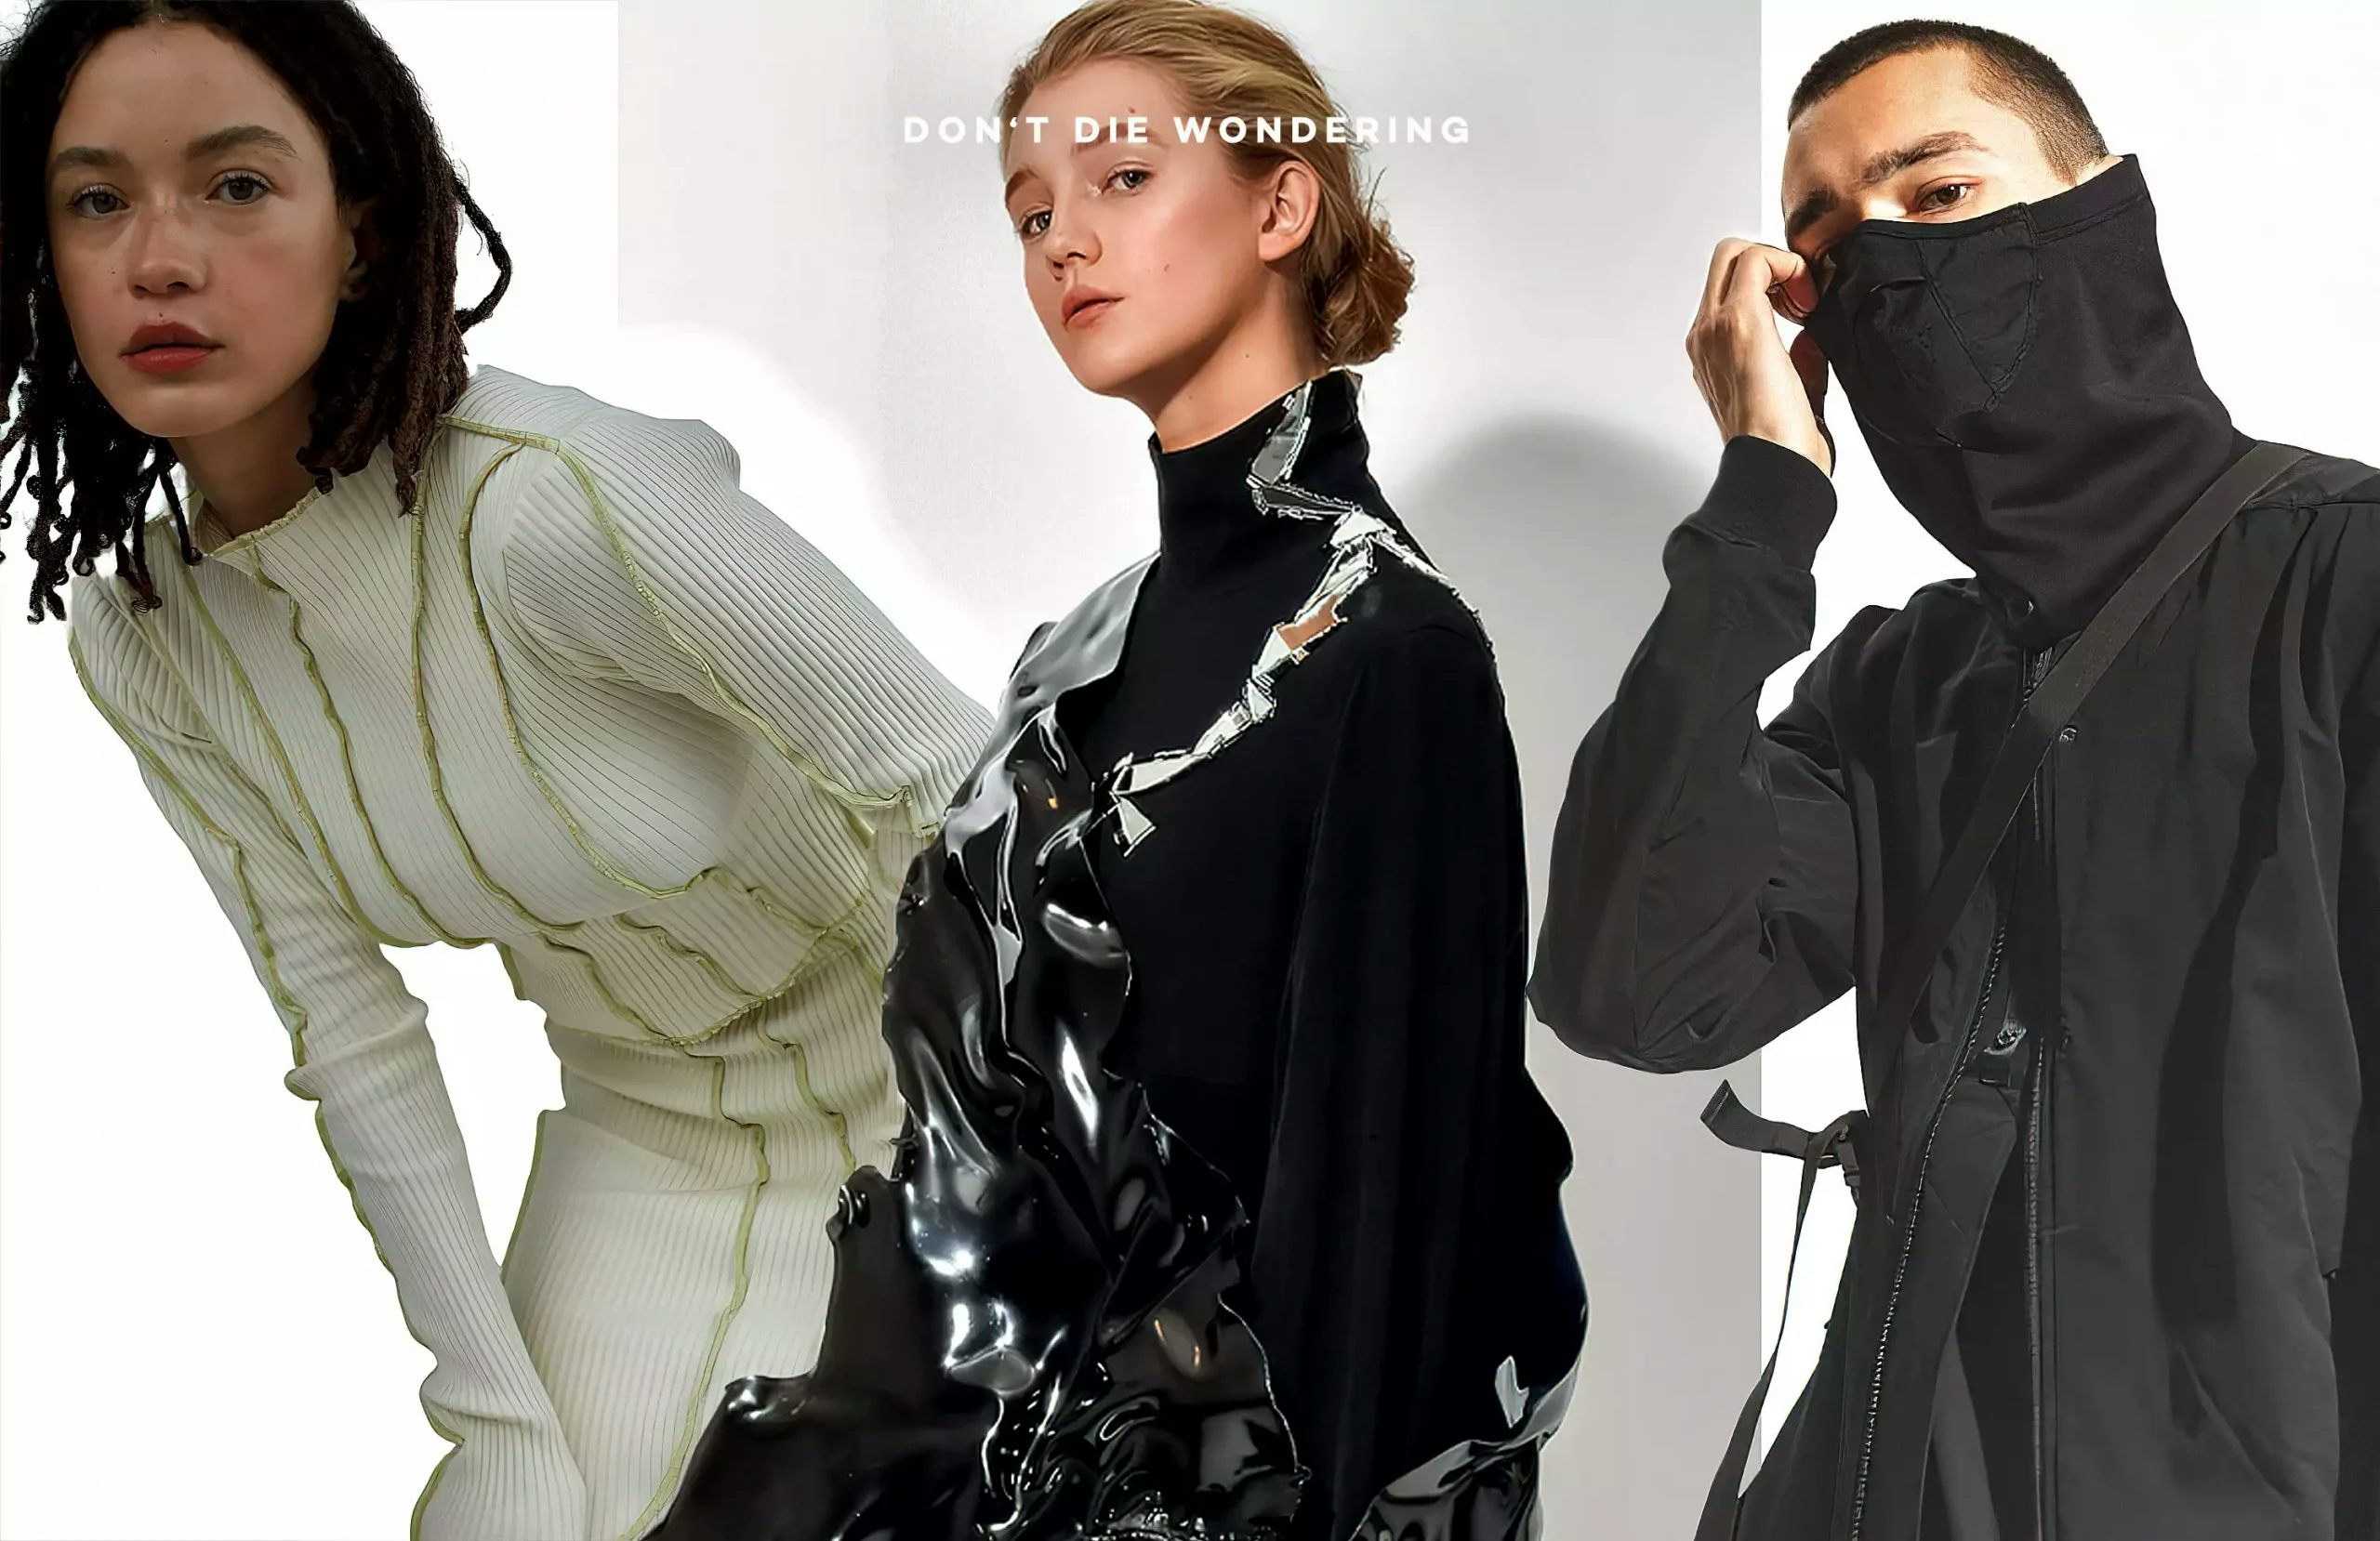 Copenhagen Fashion Week: The Three New Scandi Designers Promoting Sustainability